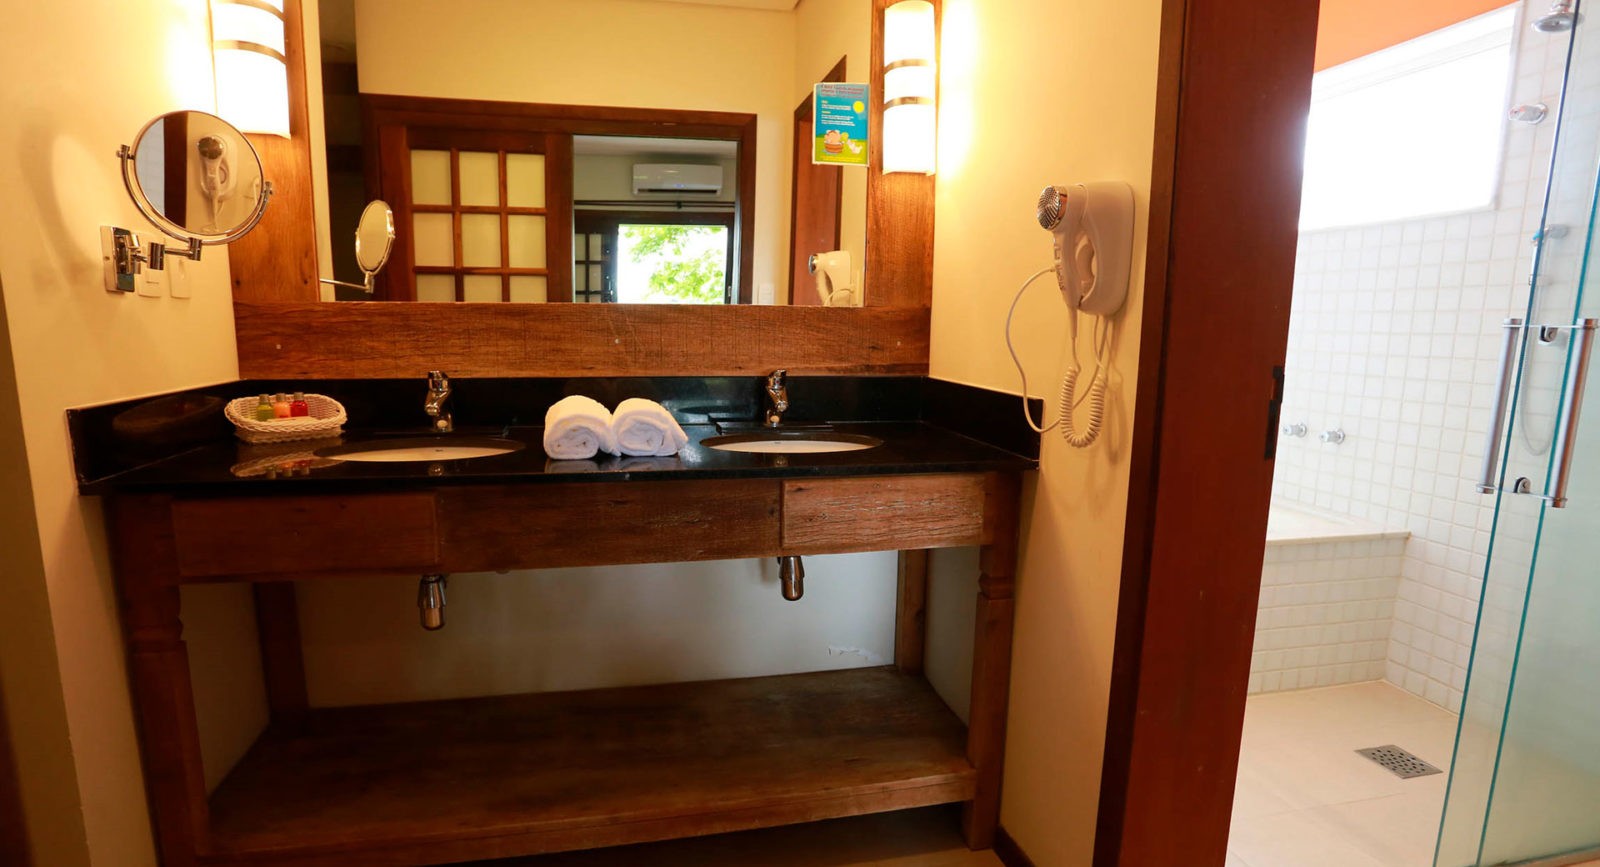 banheiro suites hotel fazenda mazzaropi - Suítes